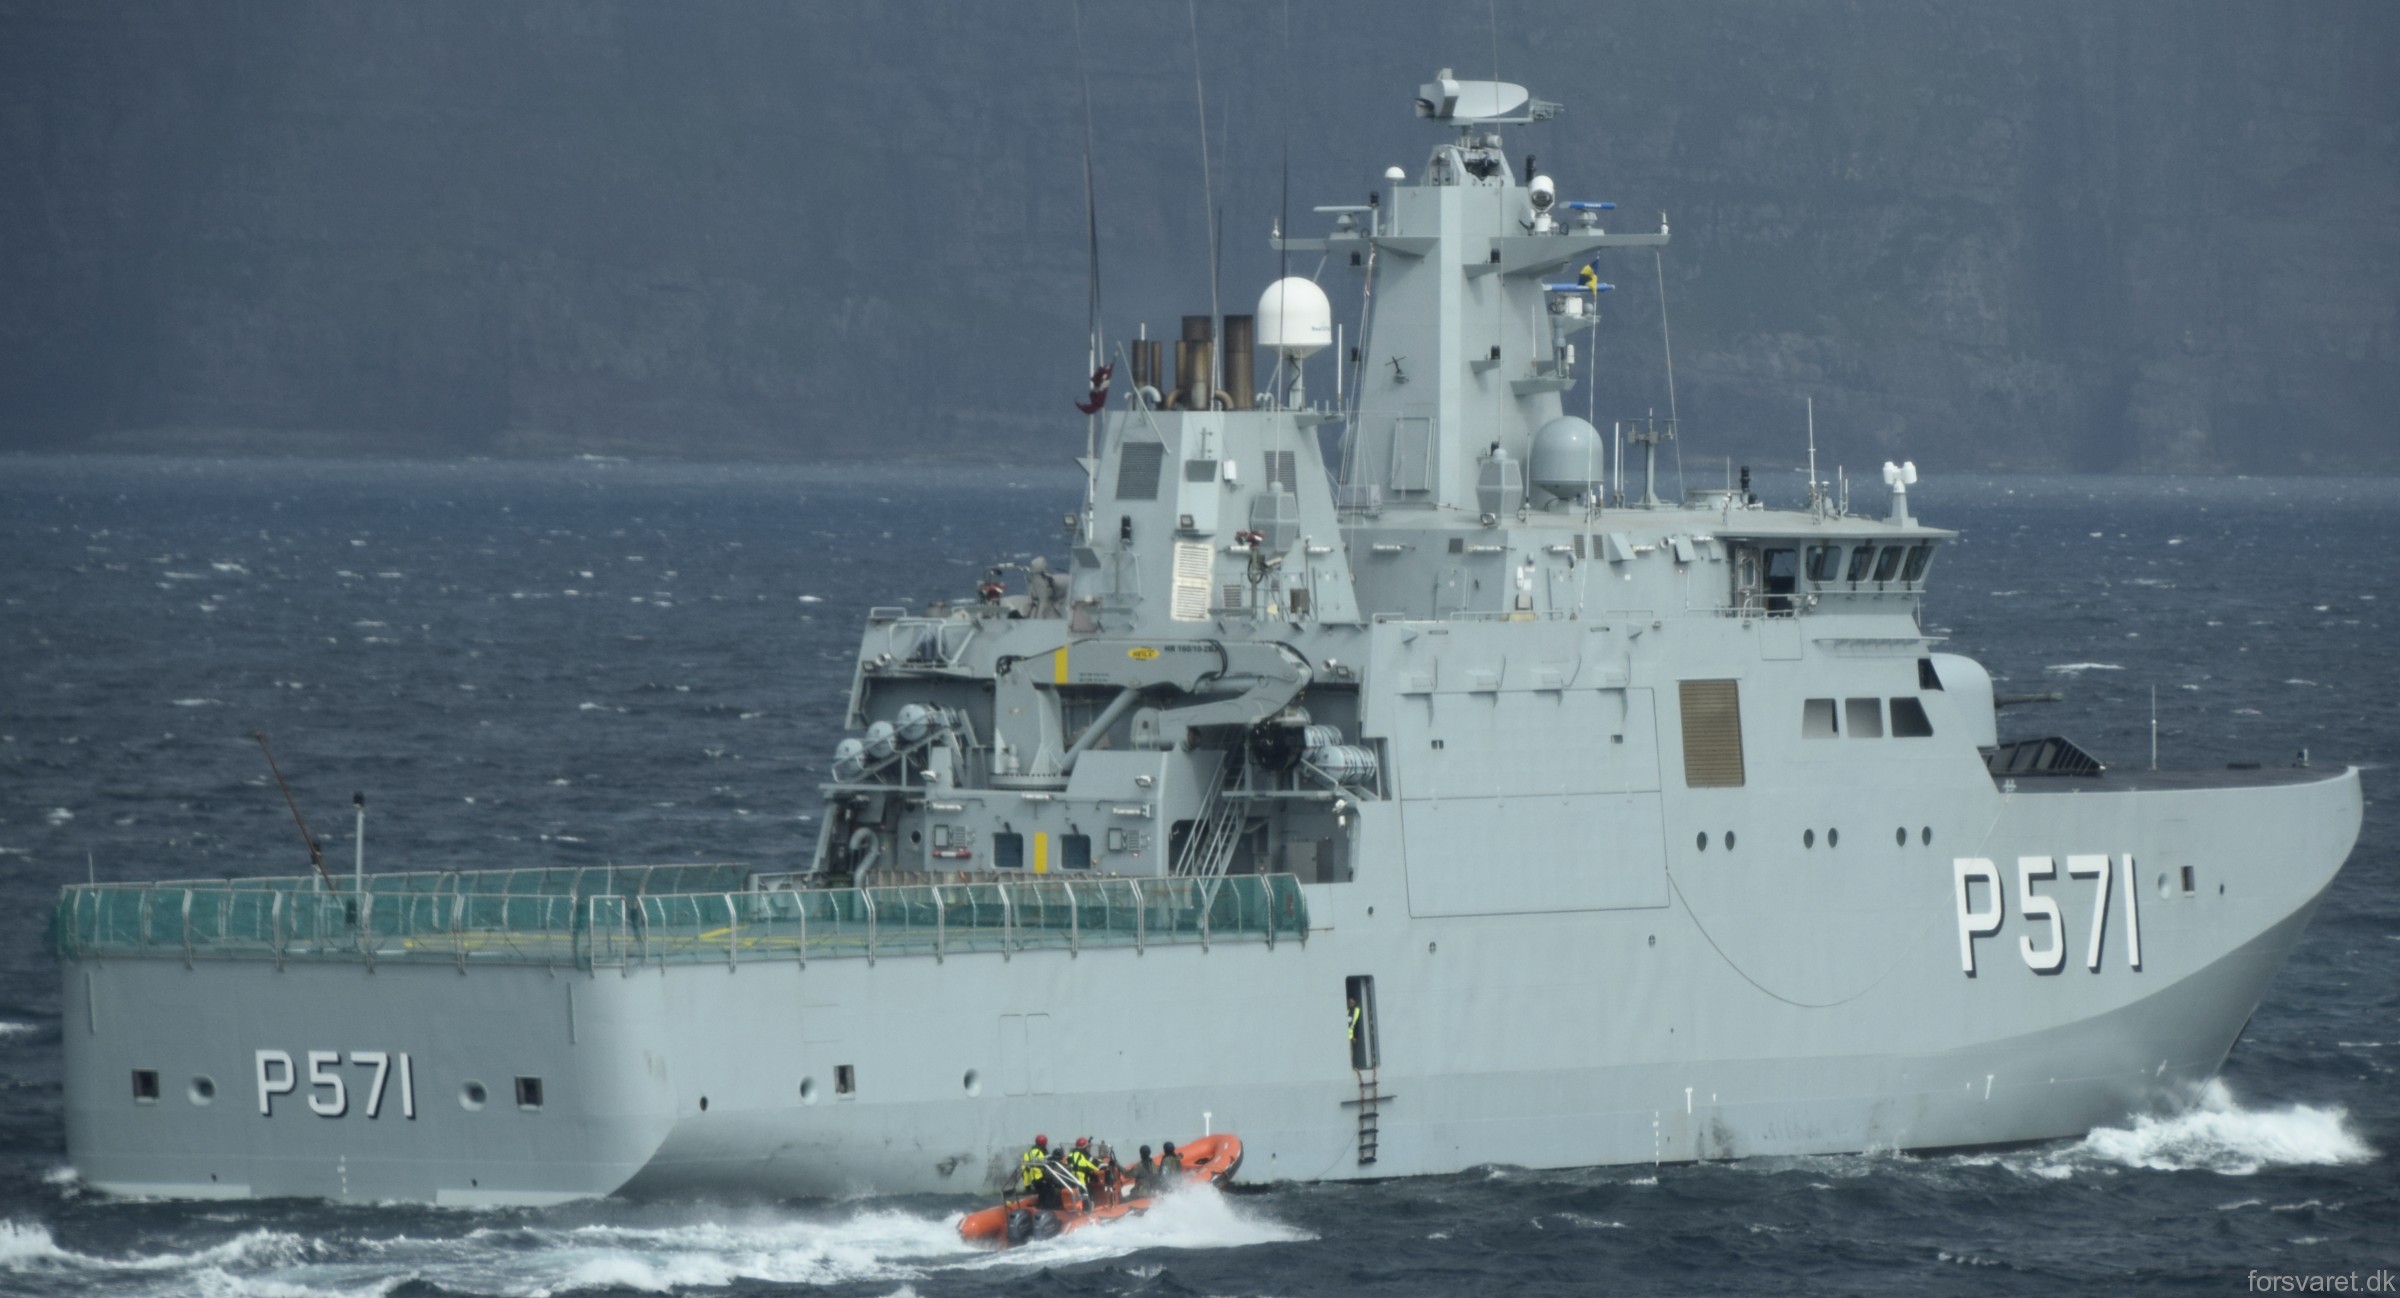 p-571 hdms ejnar mikkelsen knud rasmussen class offshore patrol vessel opv royal danish navy inspektionsfartøj 06